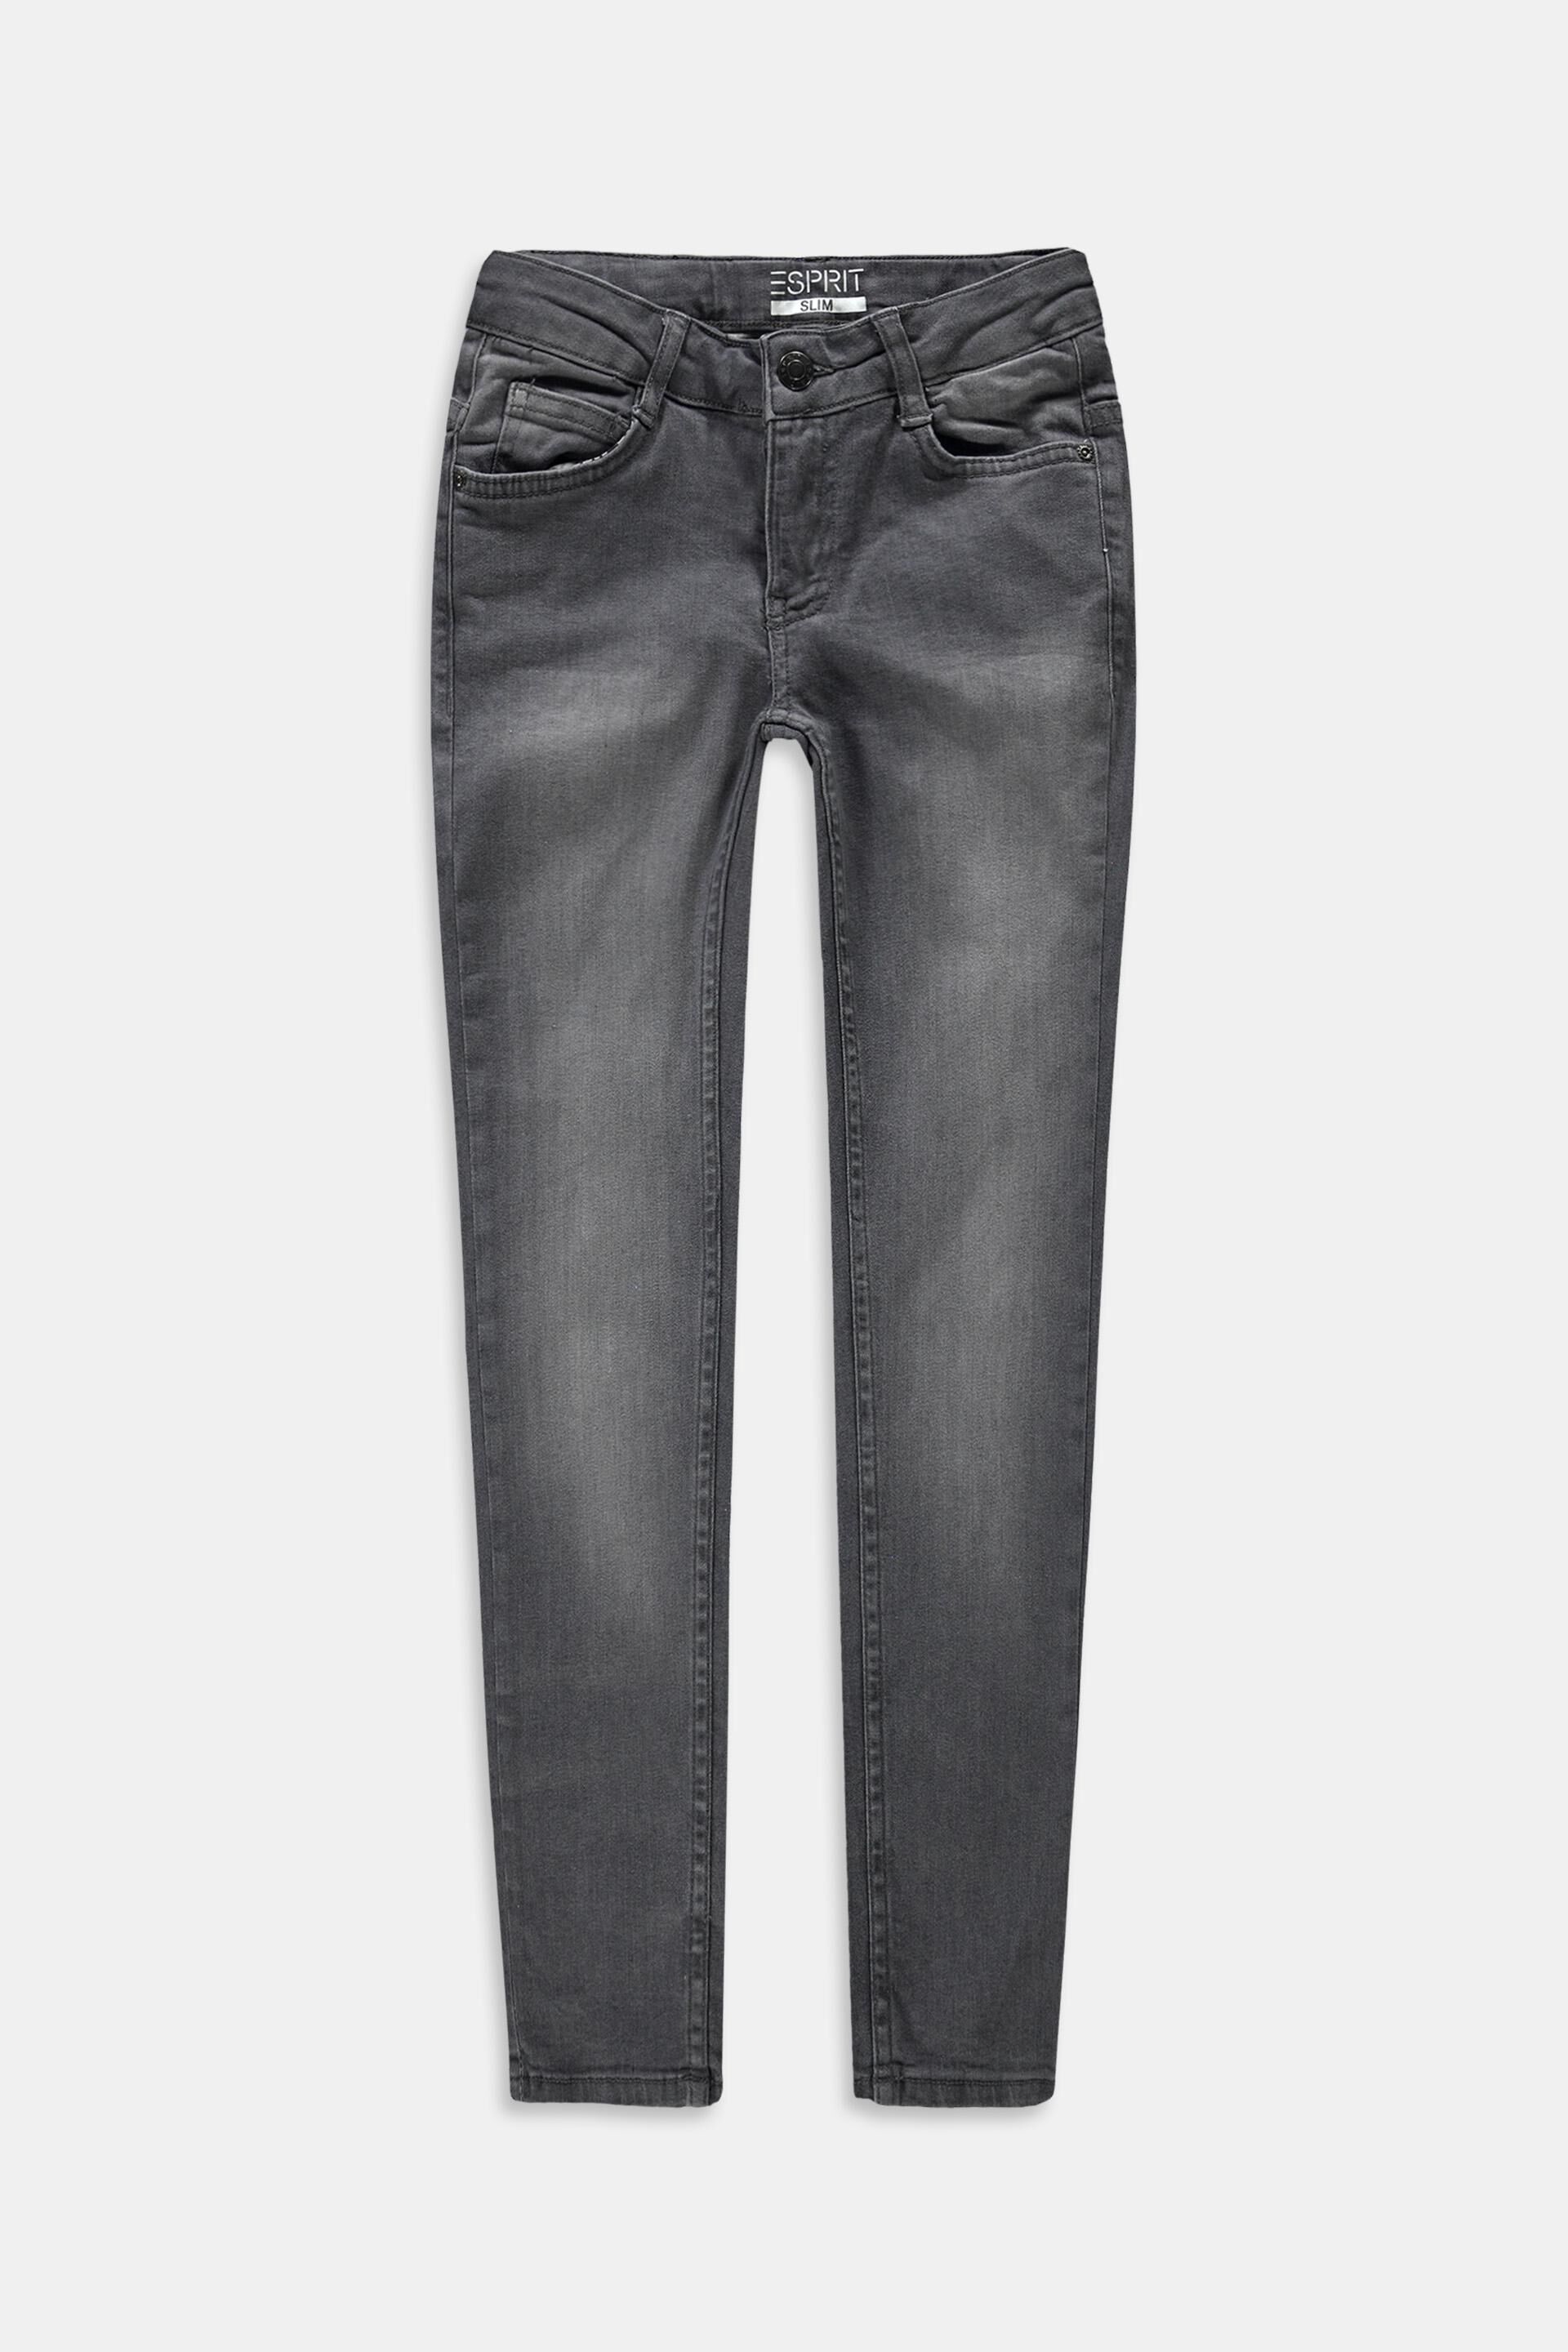 Grau 10Y Rabatt 67 % NoName Jeans KINDER Hosen Ripped 